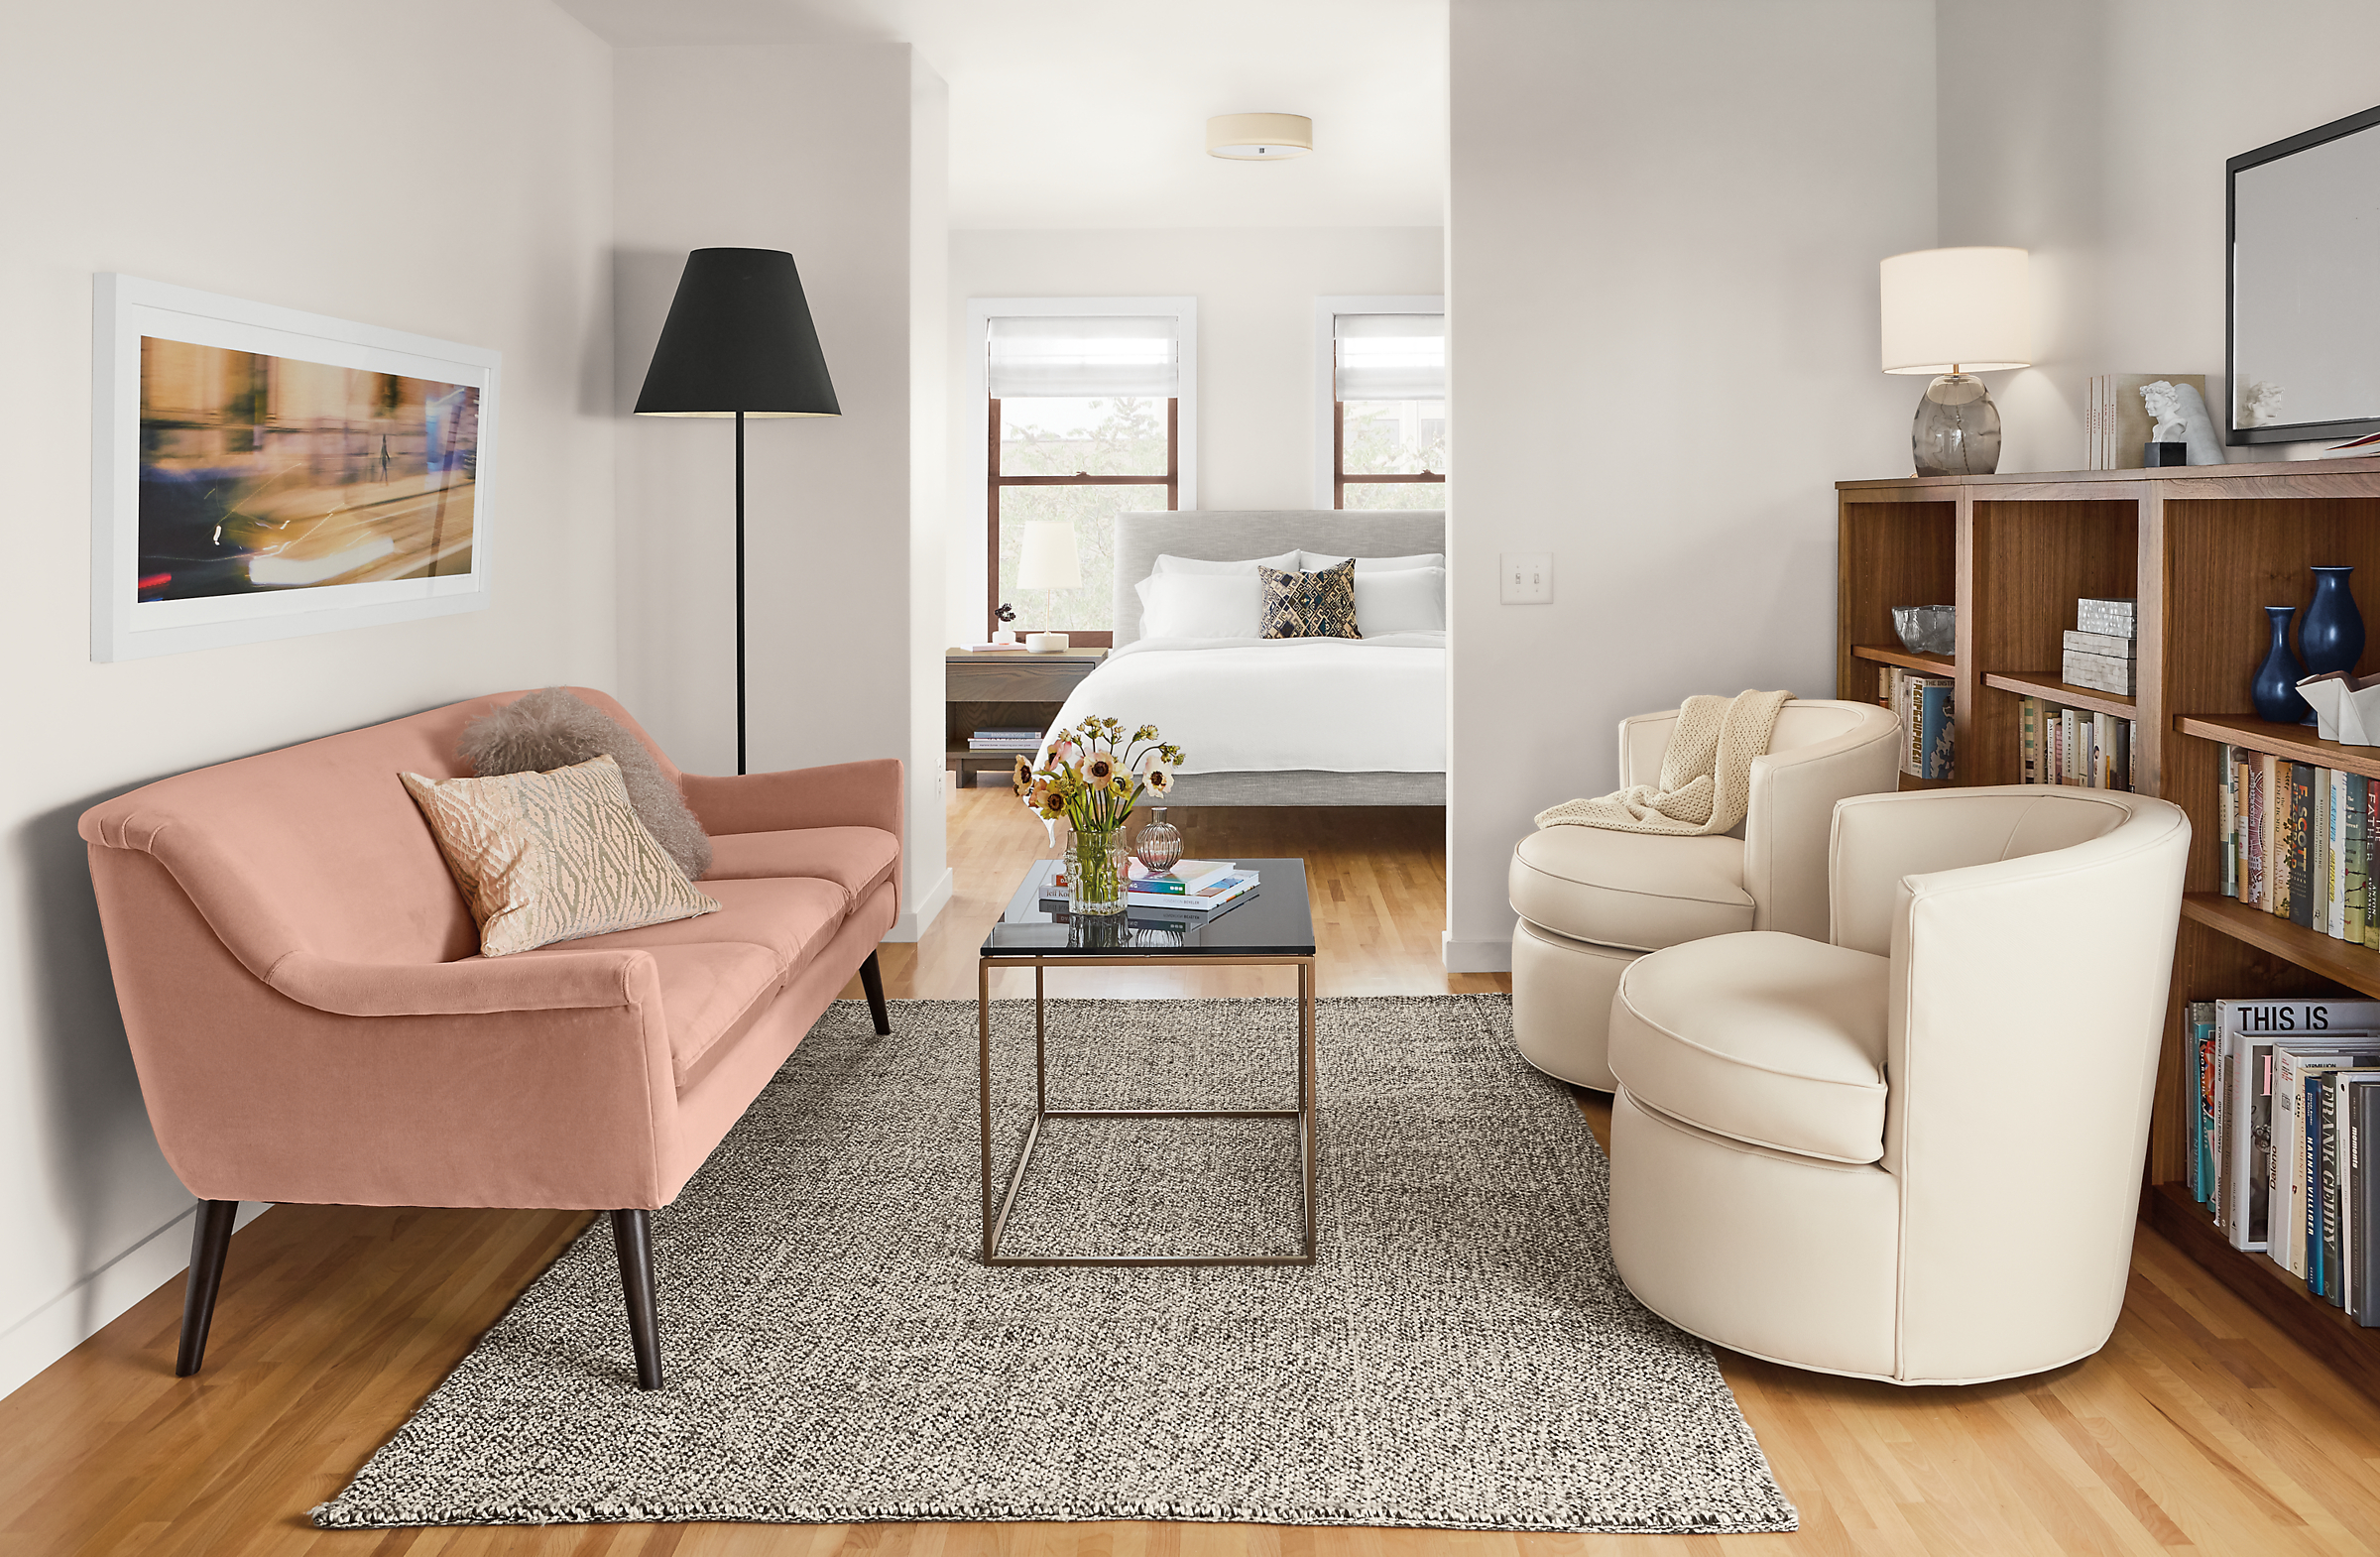 Murphy pink velvet sofa in small space.